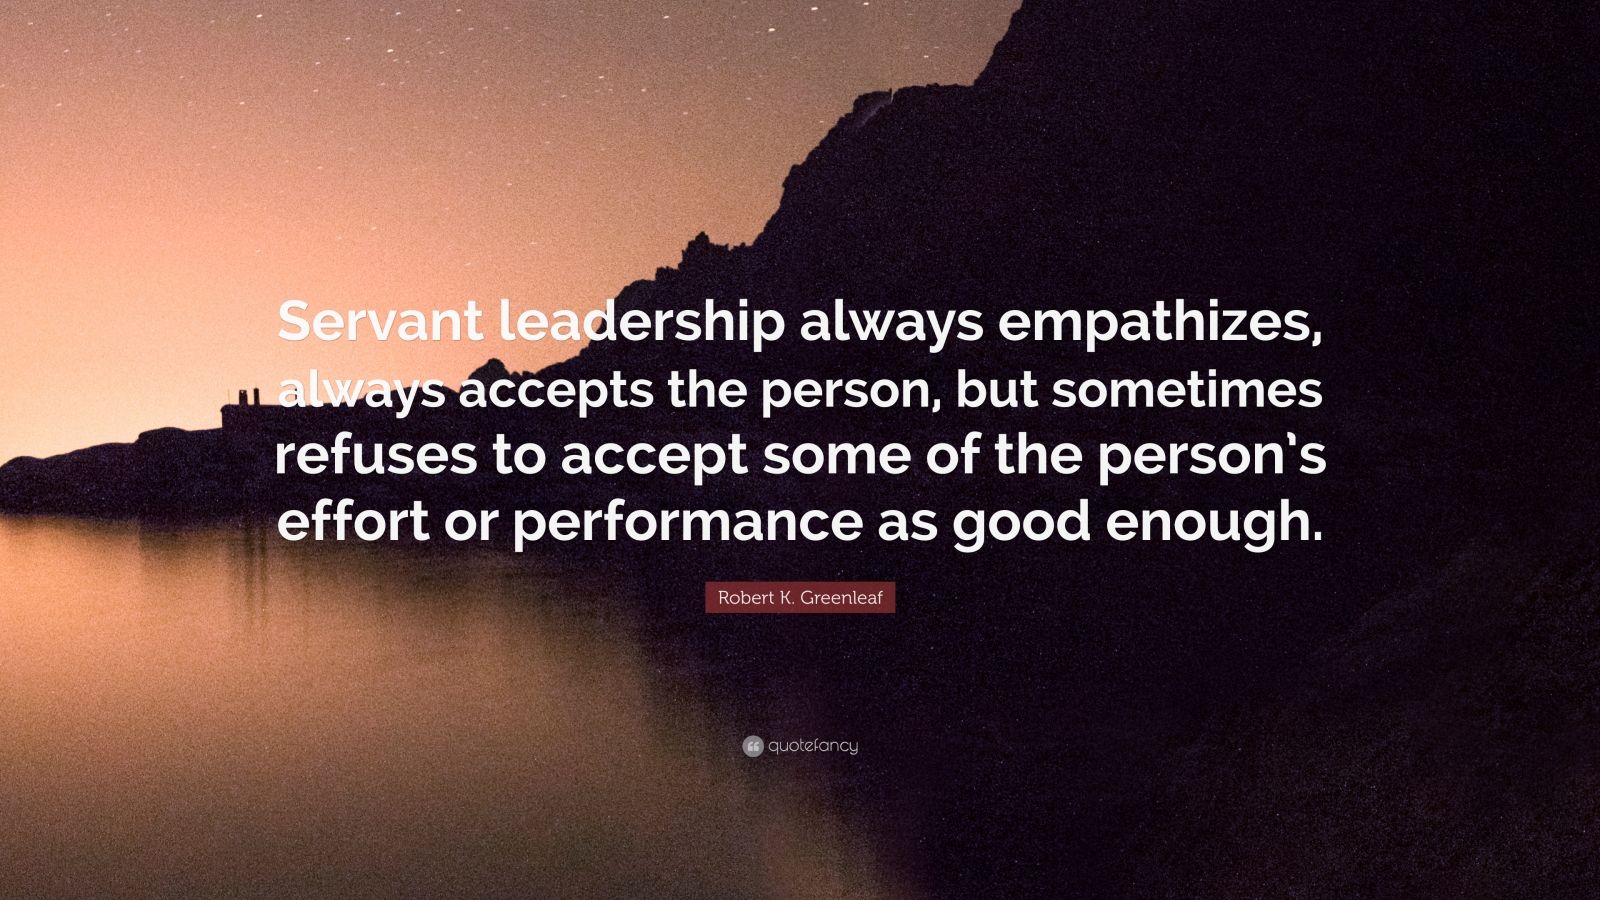 Robert K. Greenleaf Quote: “Servant leadership always empathizes